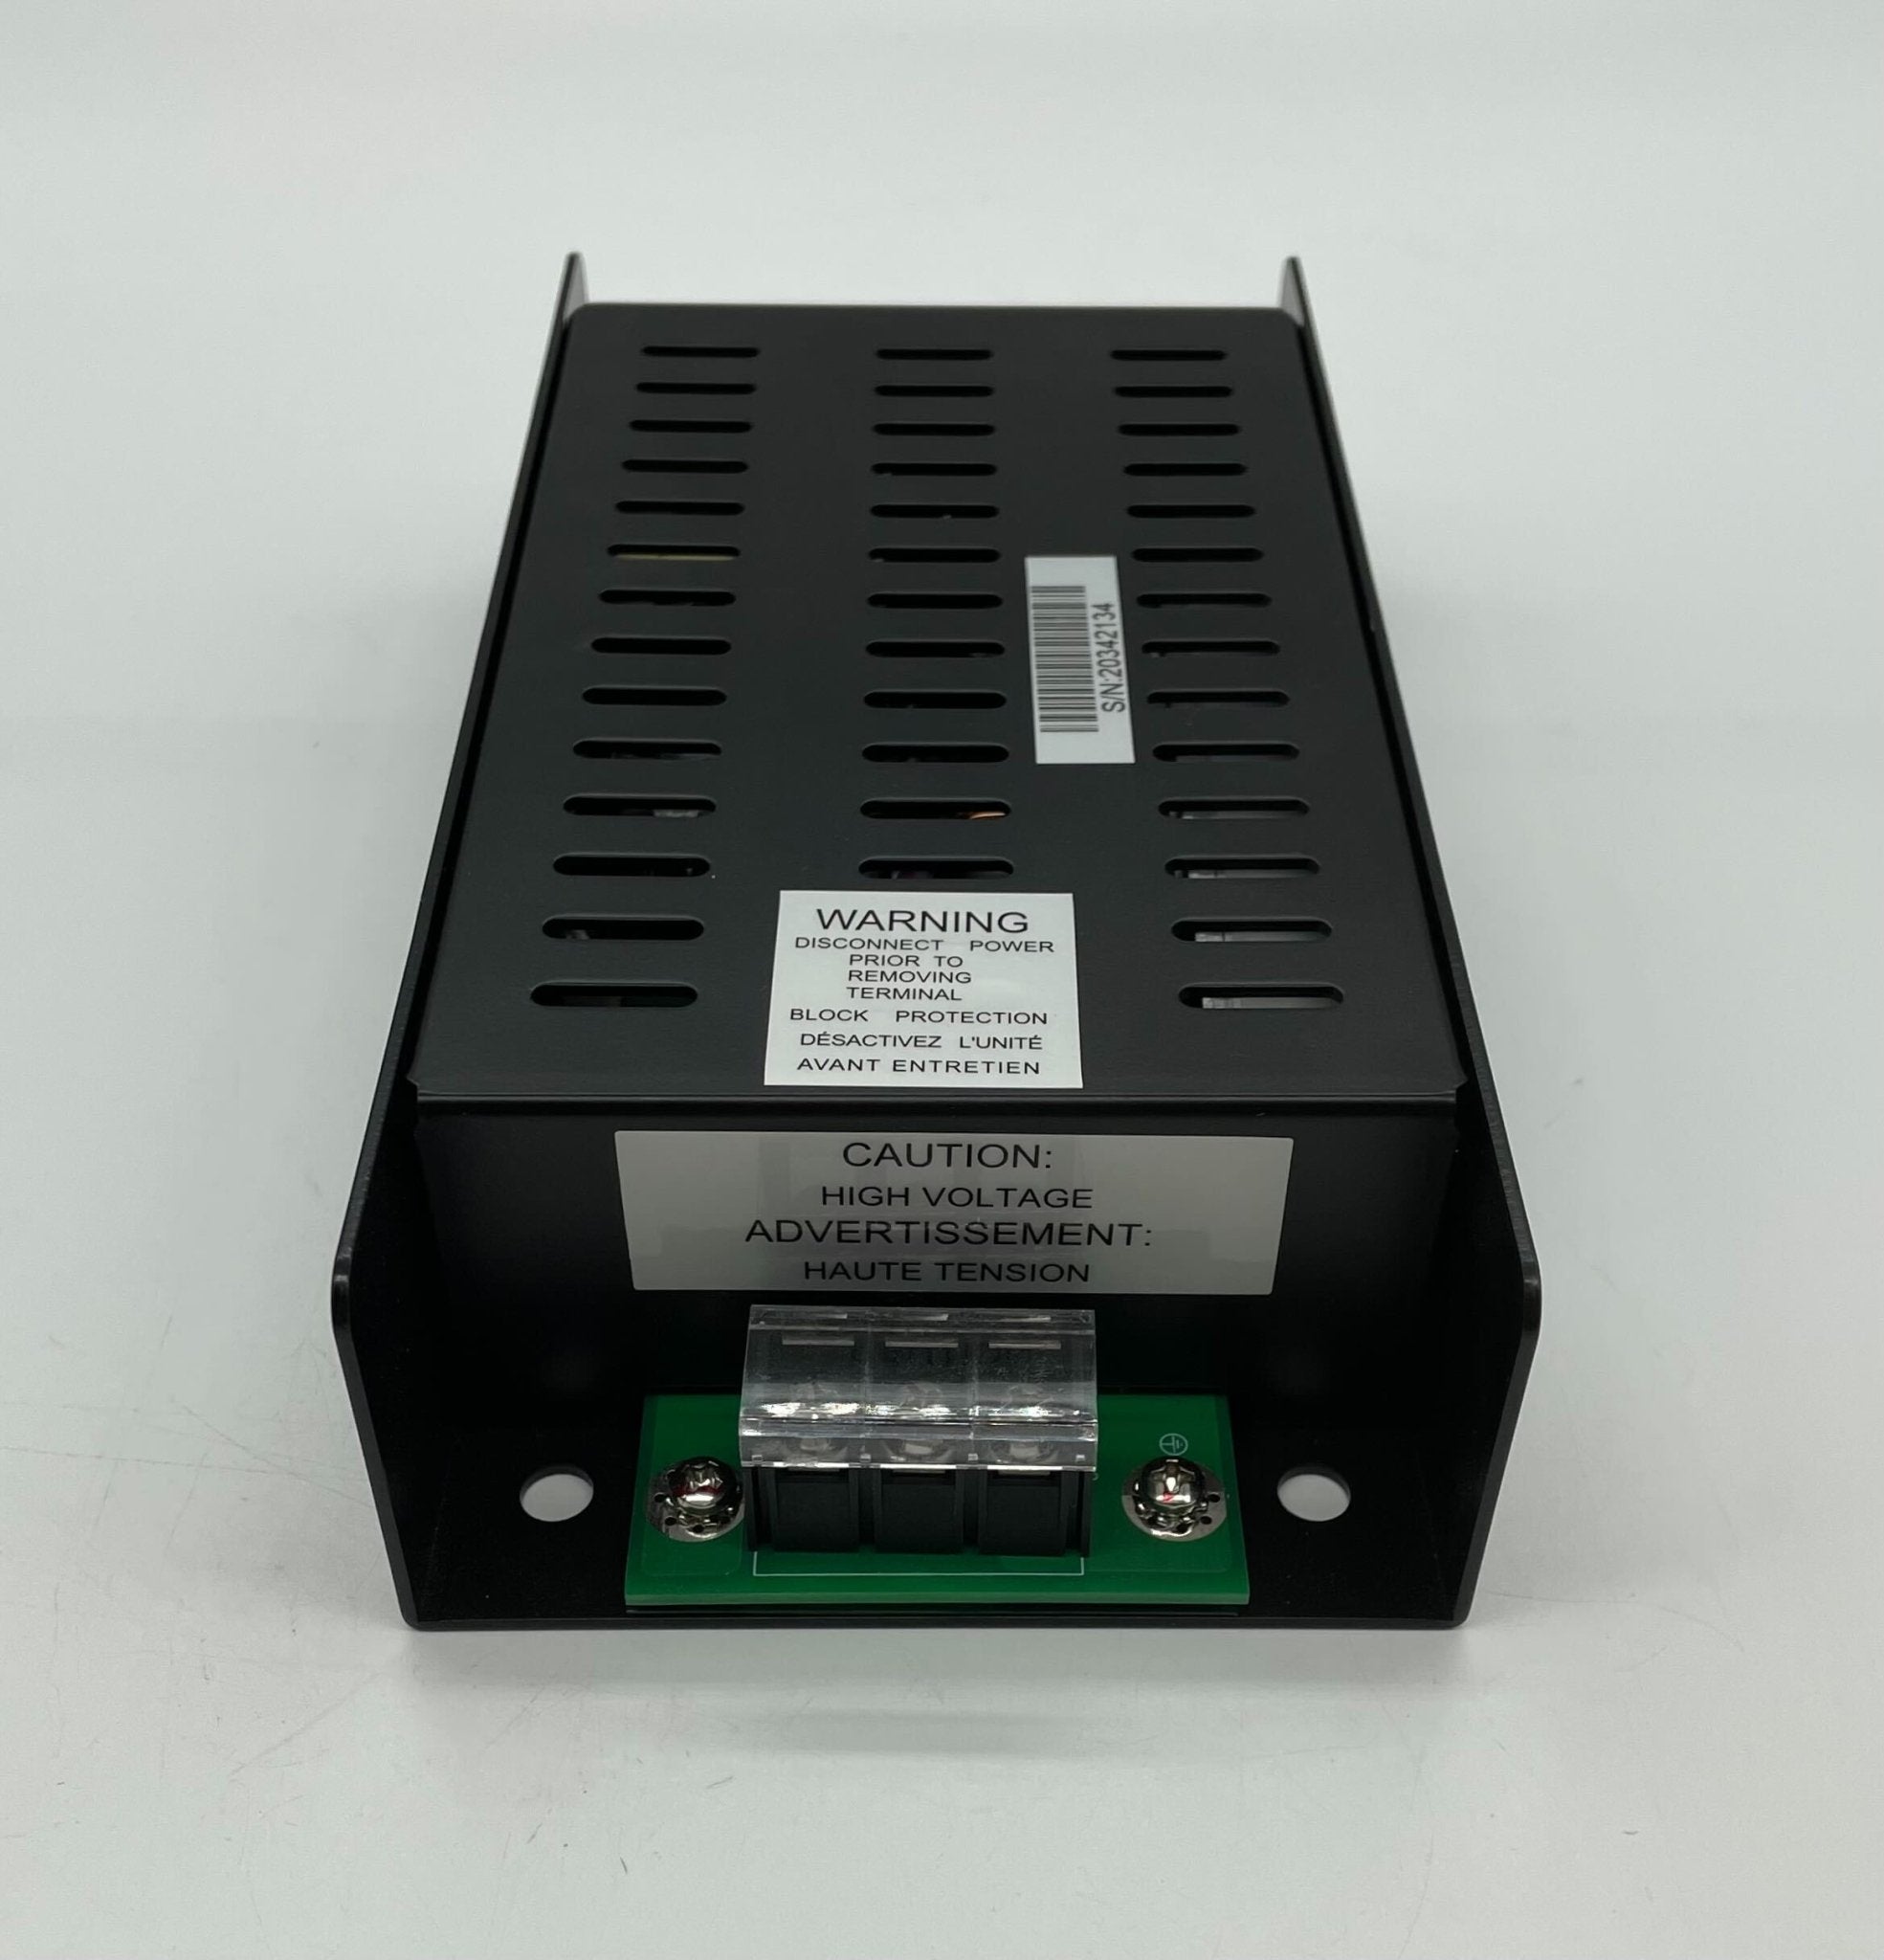 Siemens FC2025-US - The Fire Alarm Supplier